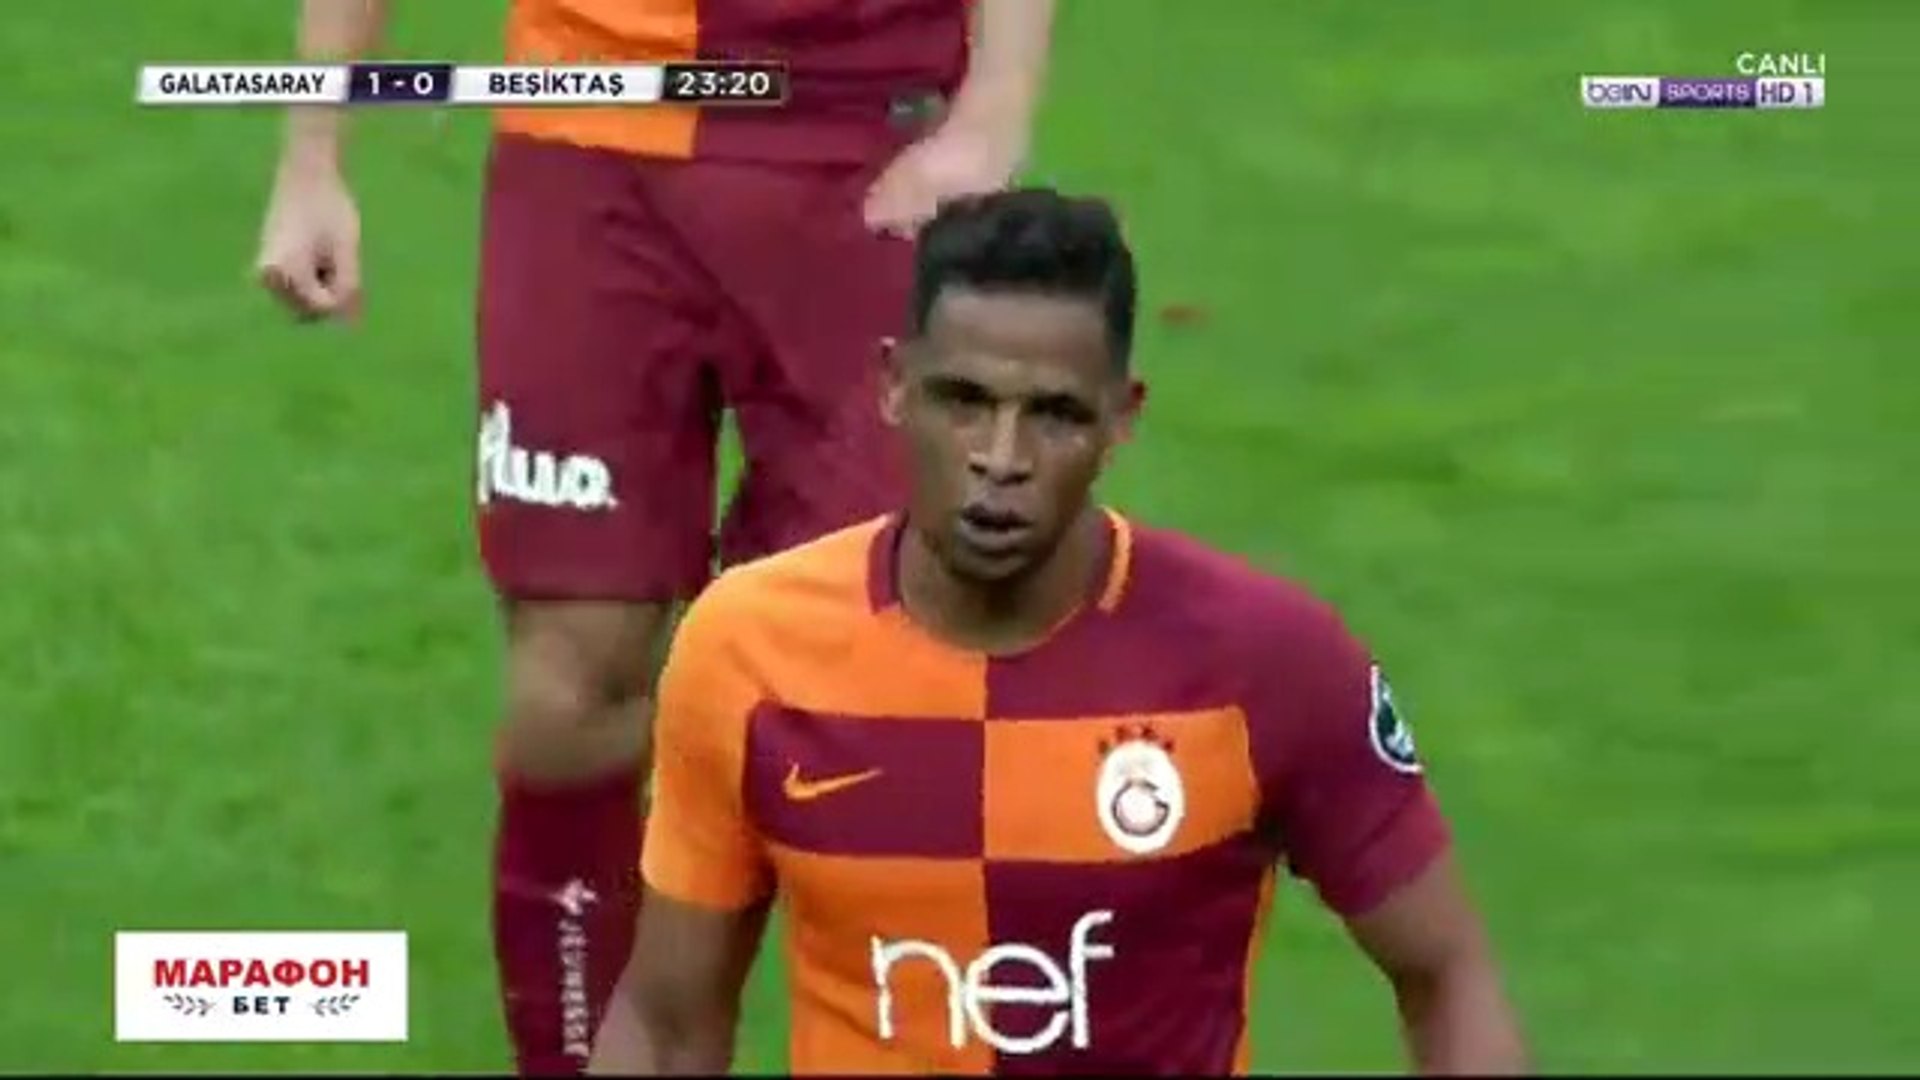 Galatasaray vs Besiktas 2 - 0 Highlights 29.04.2018 HD - video Dailymotion